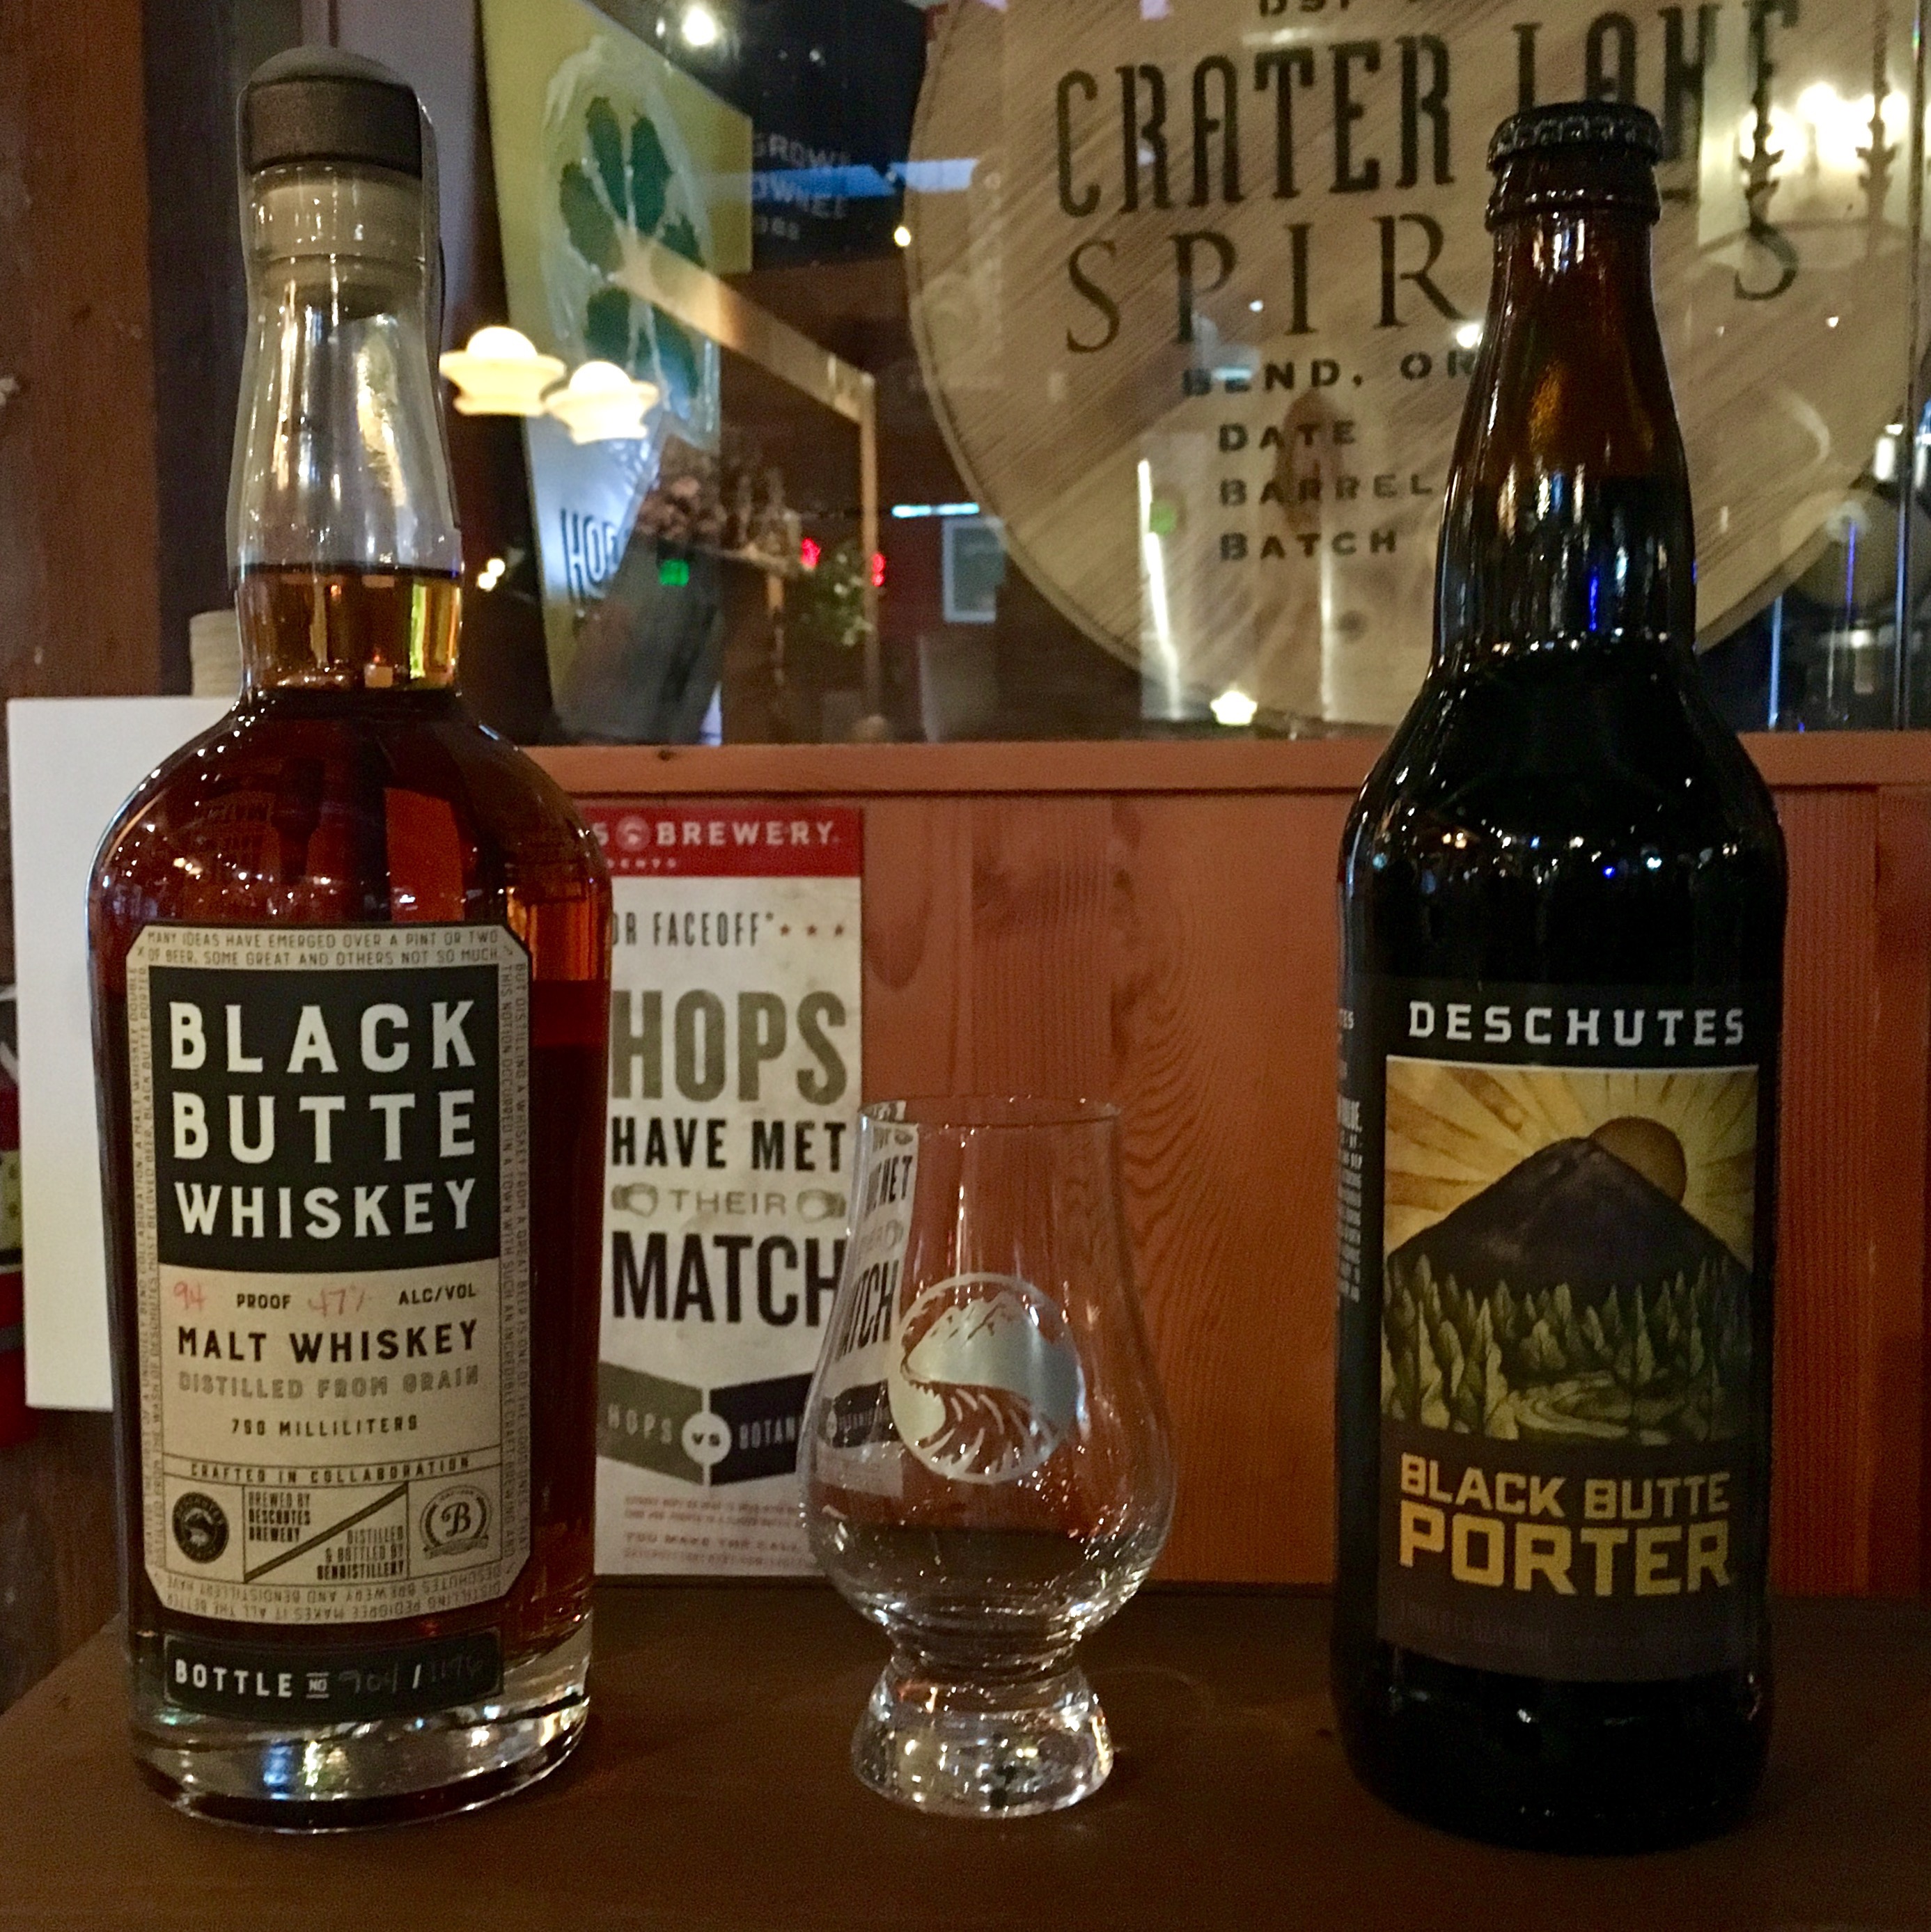 Bendistillery Black Butte Whiskey alongside Deschutes Black Butte Porter.